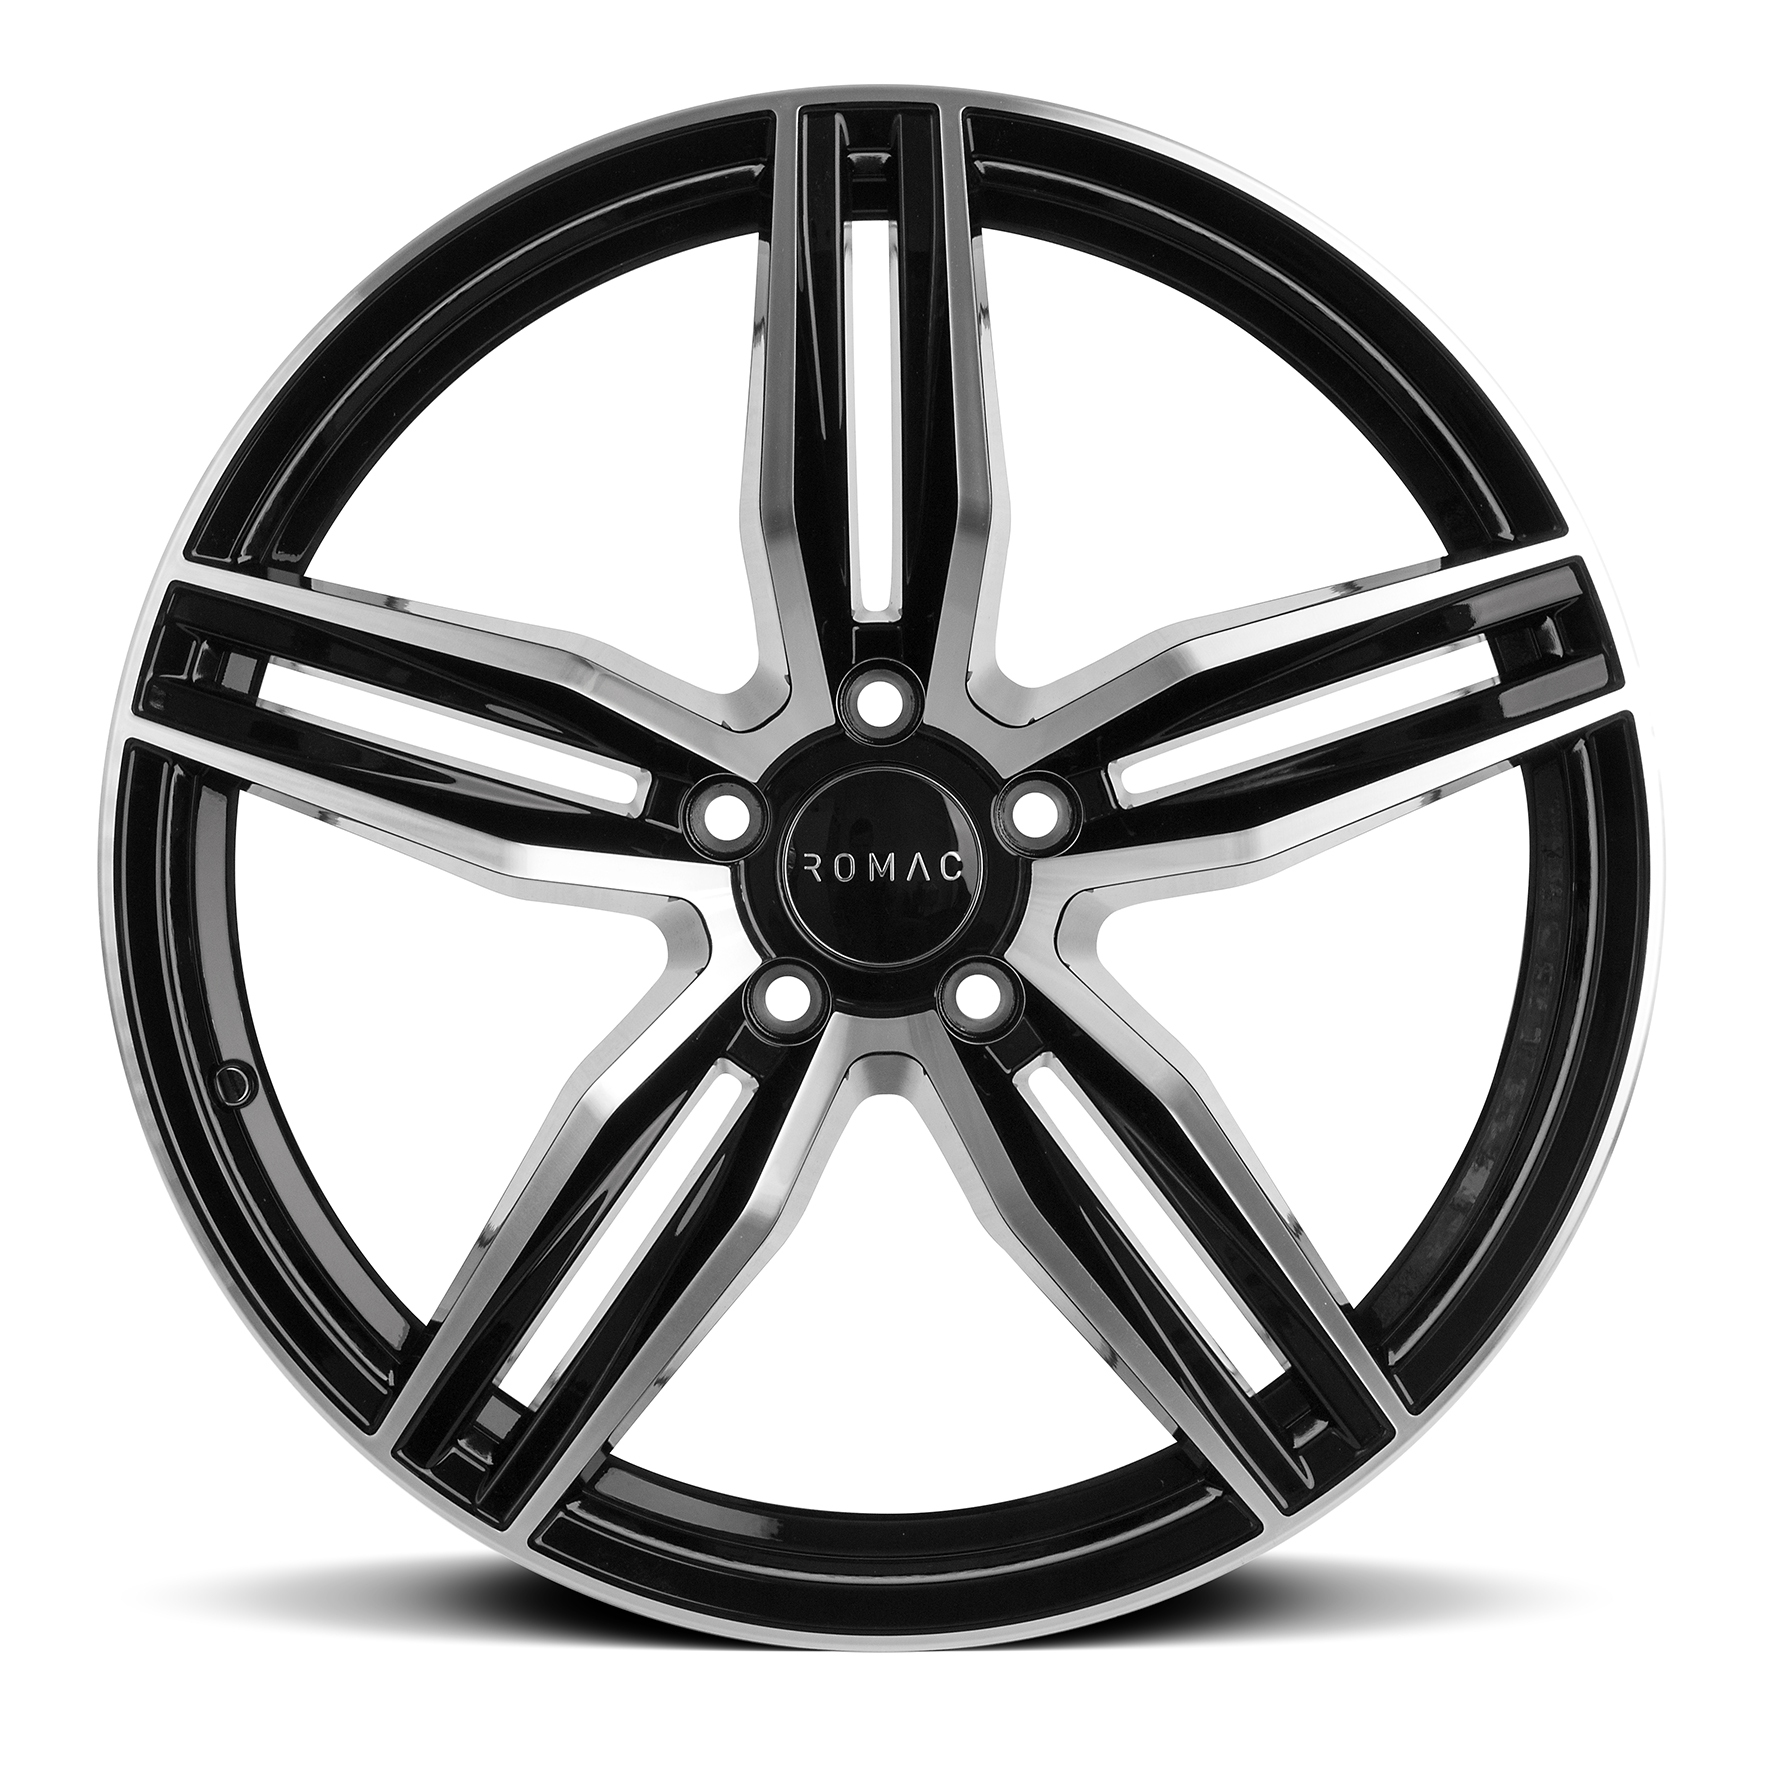 8x18 (Front) & 8.5x18 (Rear) Romac Venom Black Polished Alloy Wheels